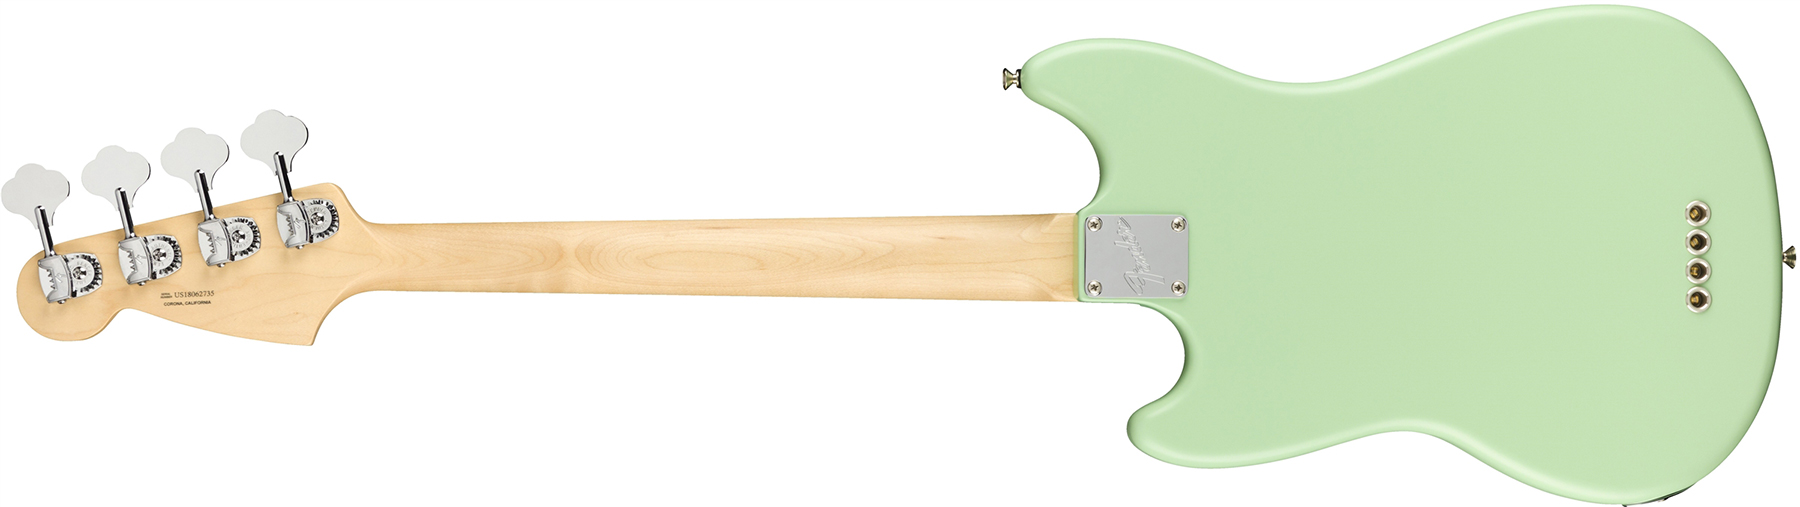 Fender Mustang Bass American Performer Usa Rw - Satin Surf Green - Short scale elektrische bas - Variation 1